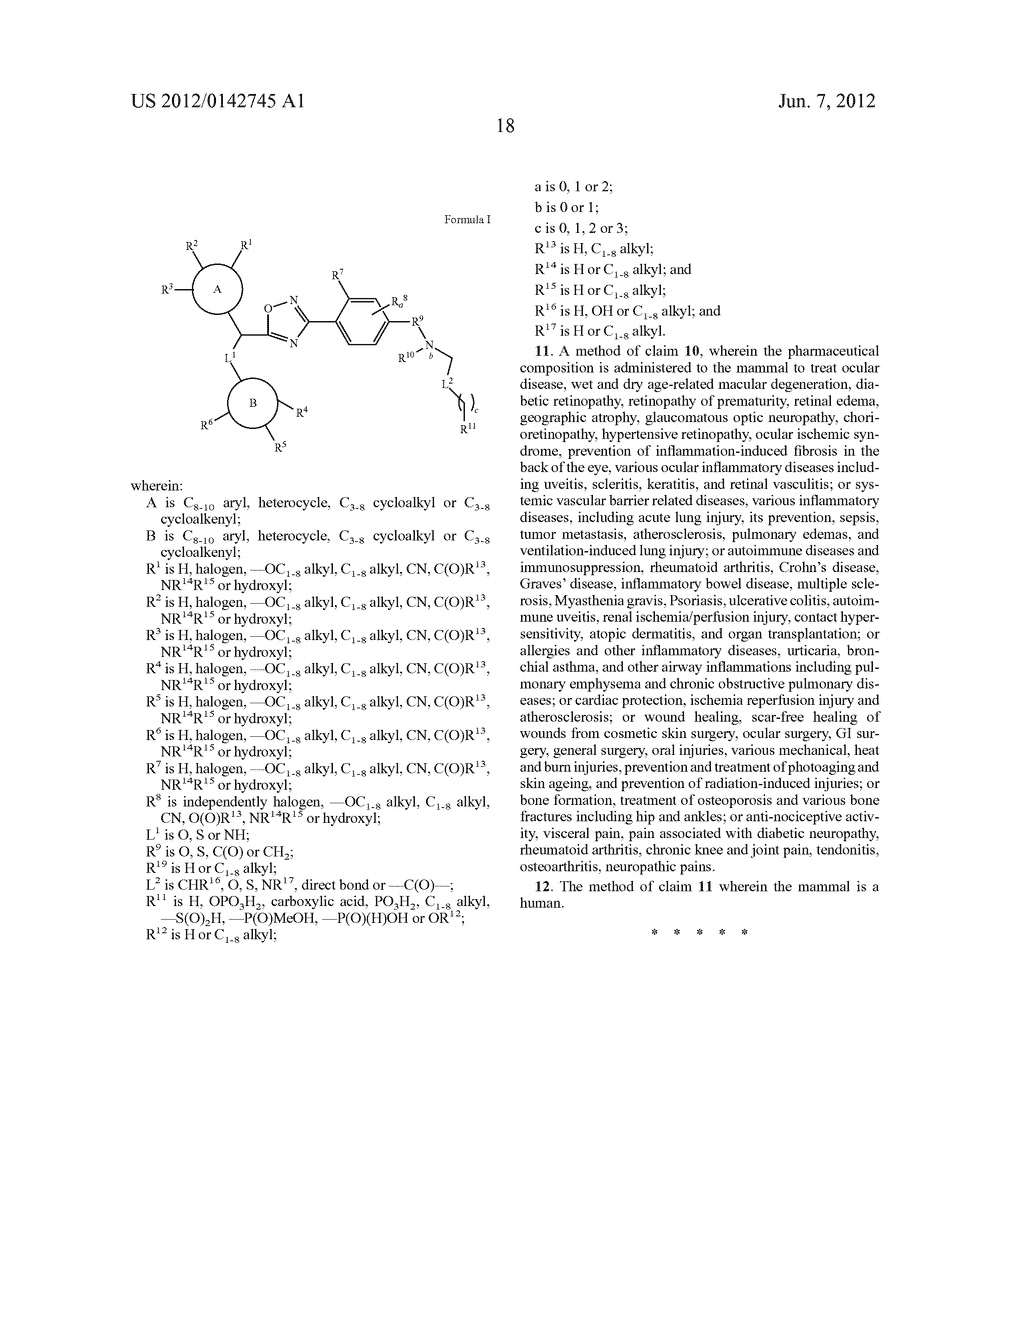 NOVEL PHENYL OXADIAZOLE DERIVATIVES AS SPHINGOSINE 1-PHOSPHATE (S1P)     RECEPTOR MODULATORS - diagram, schematic, and image 19